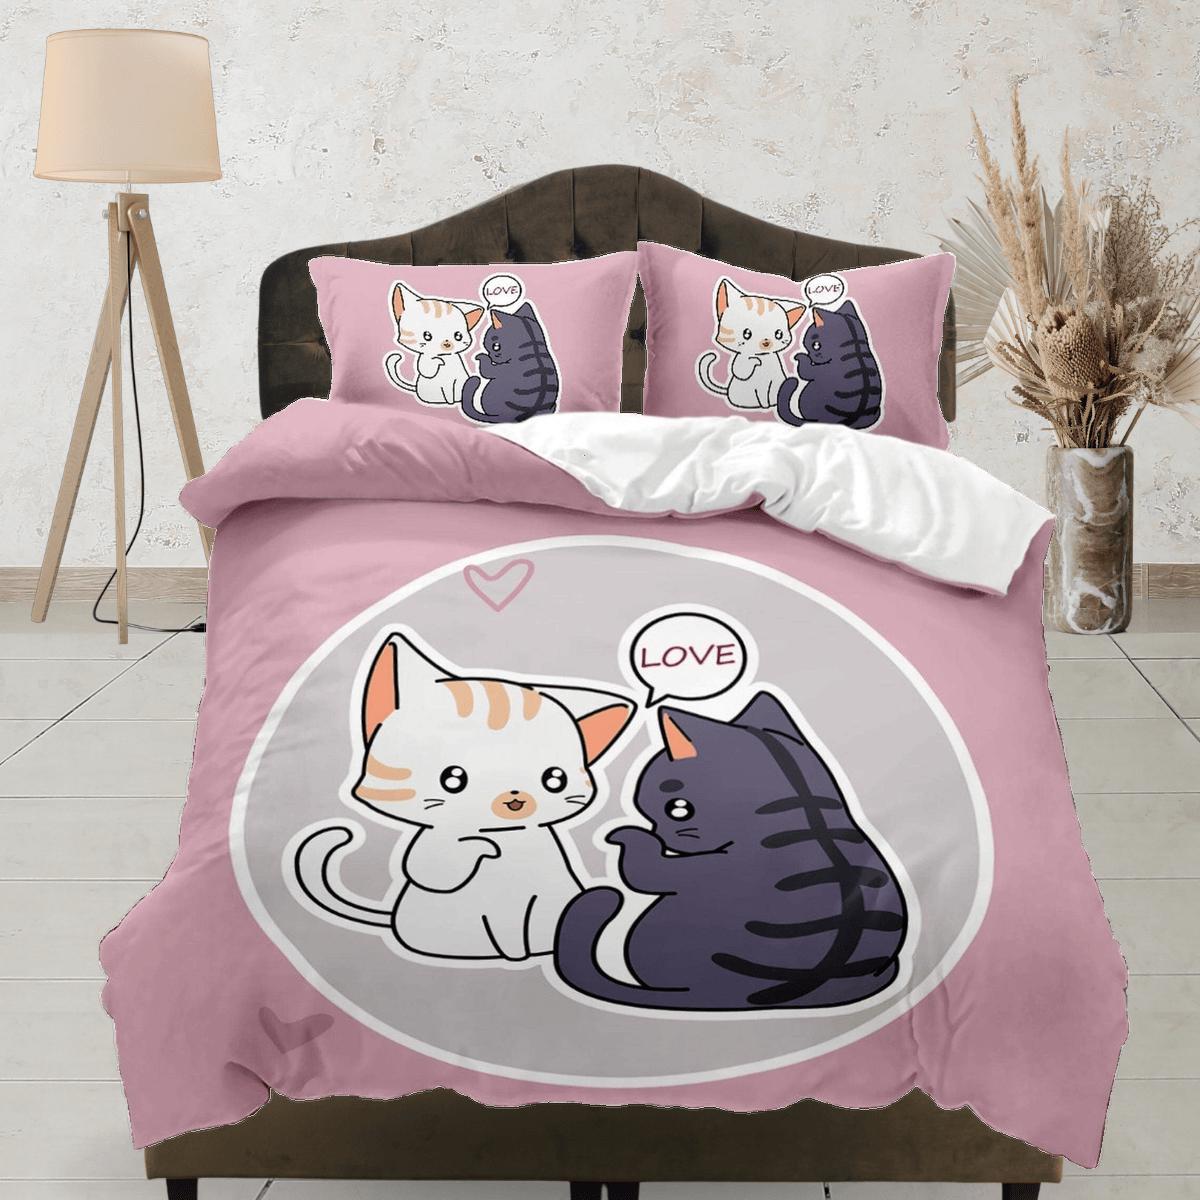 daintyduvet Cute love cat bedding, toddler bedding, kids duvet cover set, gift for cat lovers, baby bedding, baby shower gift, pink bedding